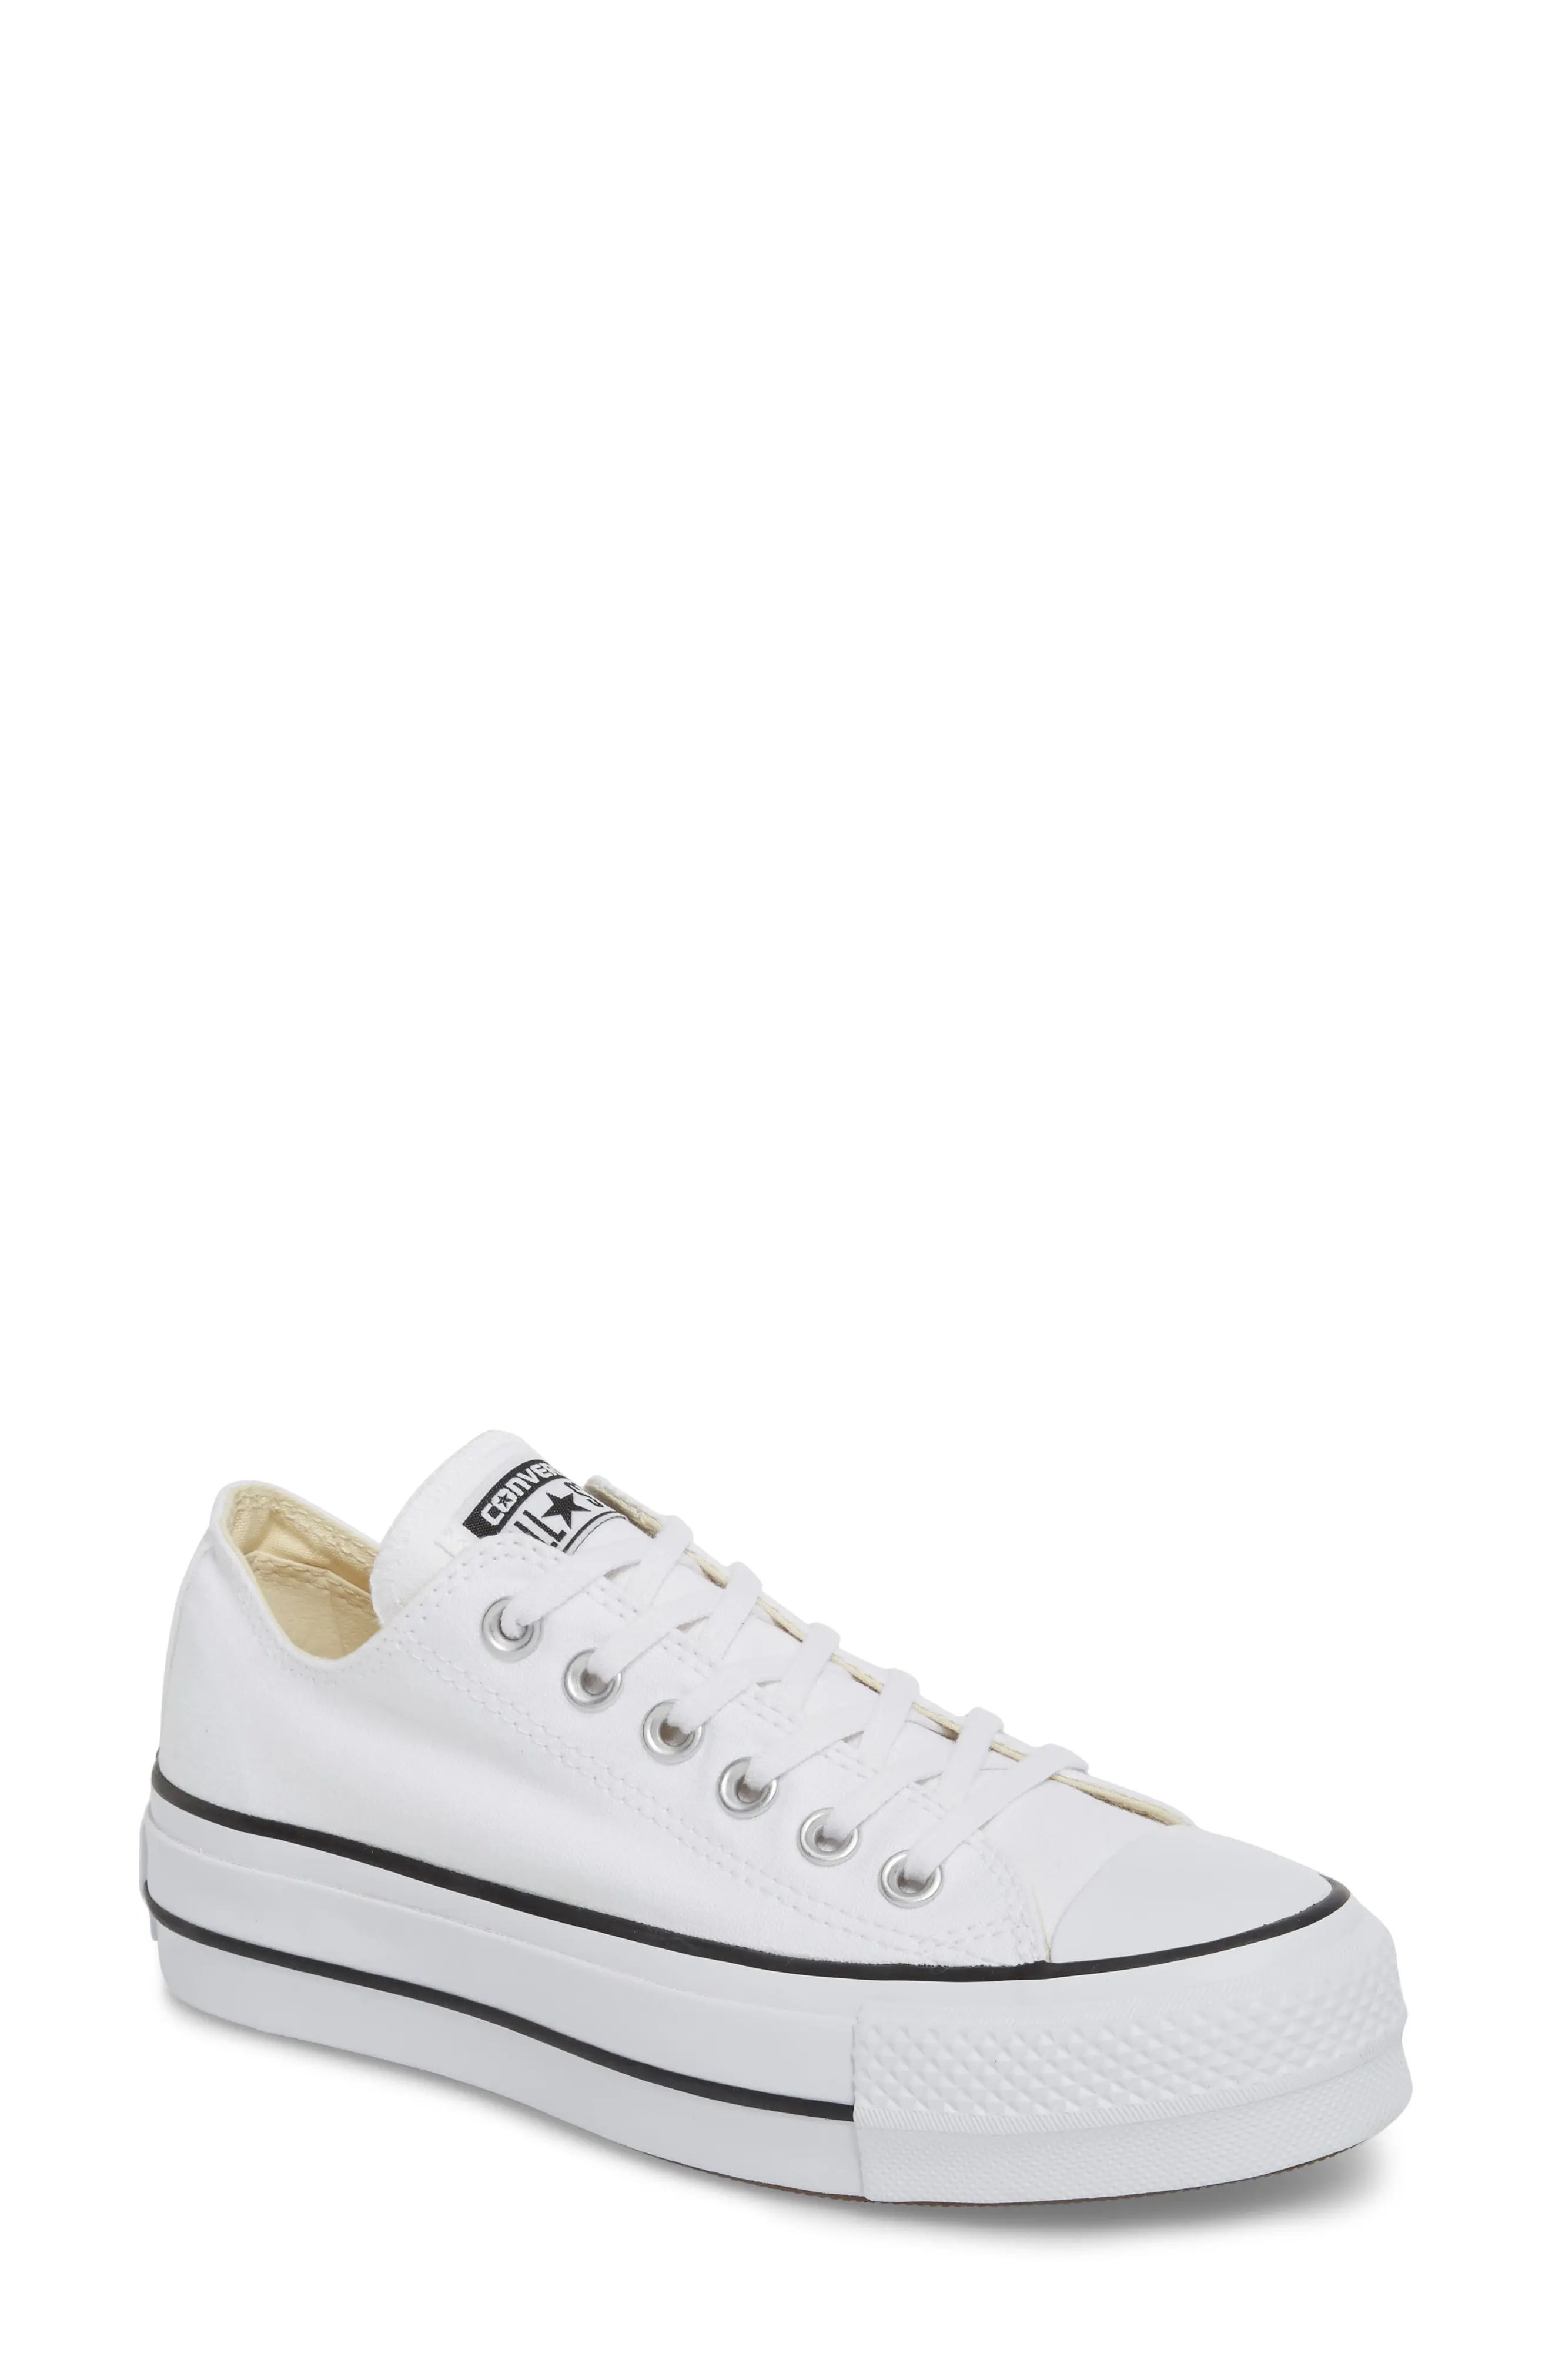 Women's Converse Chuck Taylor All Star Platform Sneaker, Size 11 M - White | Nordstrom